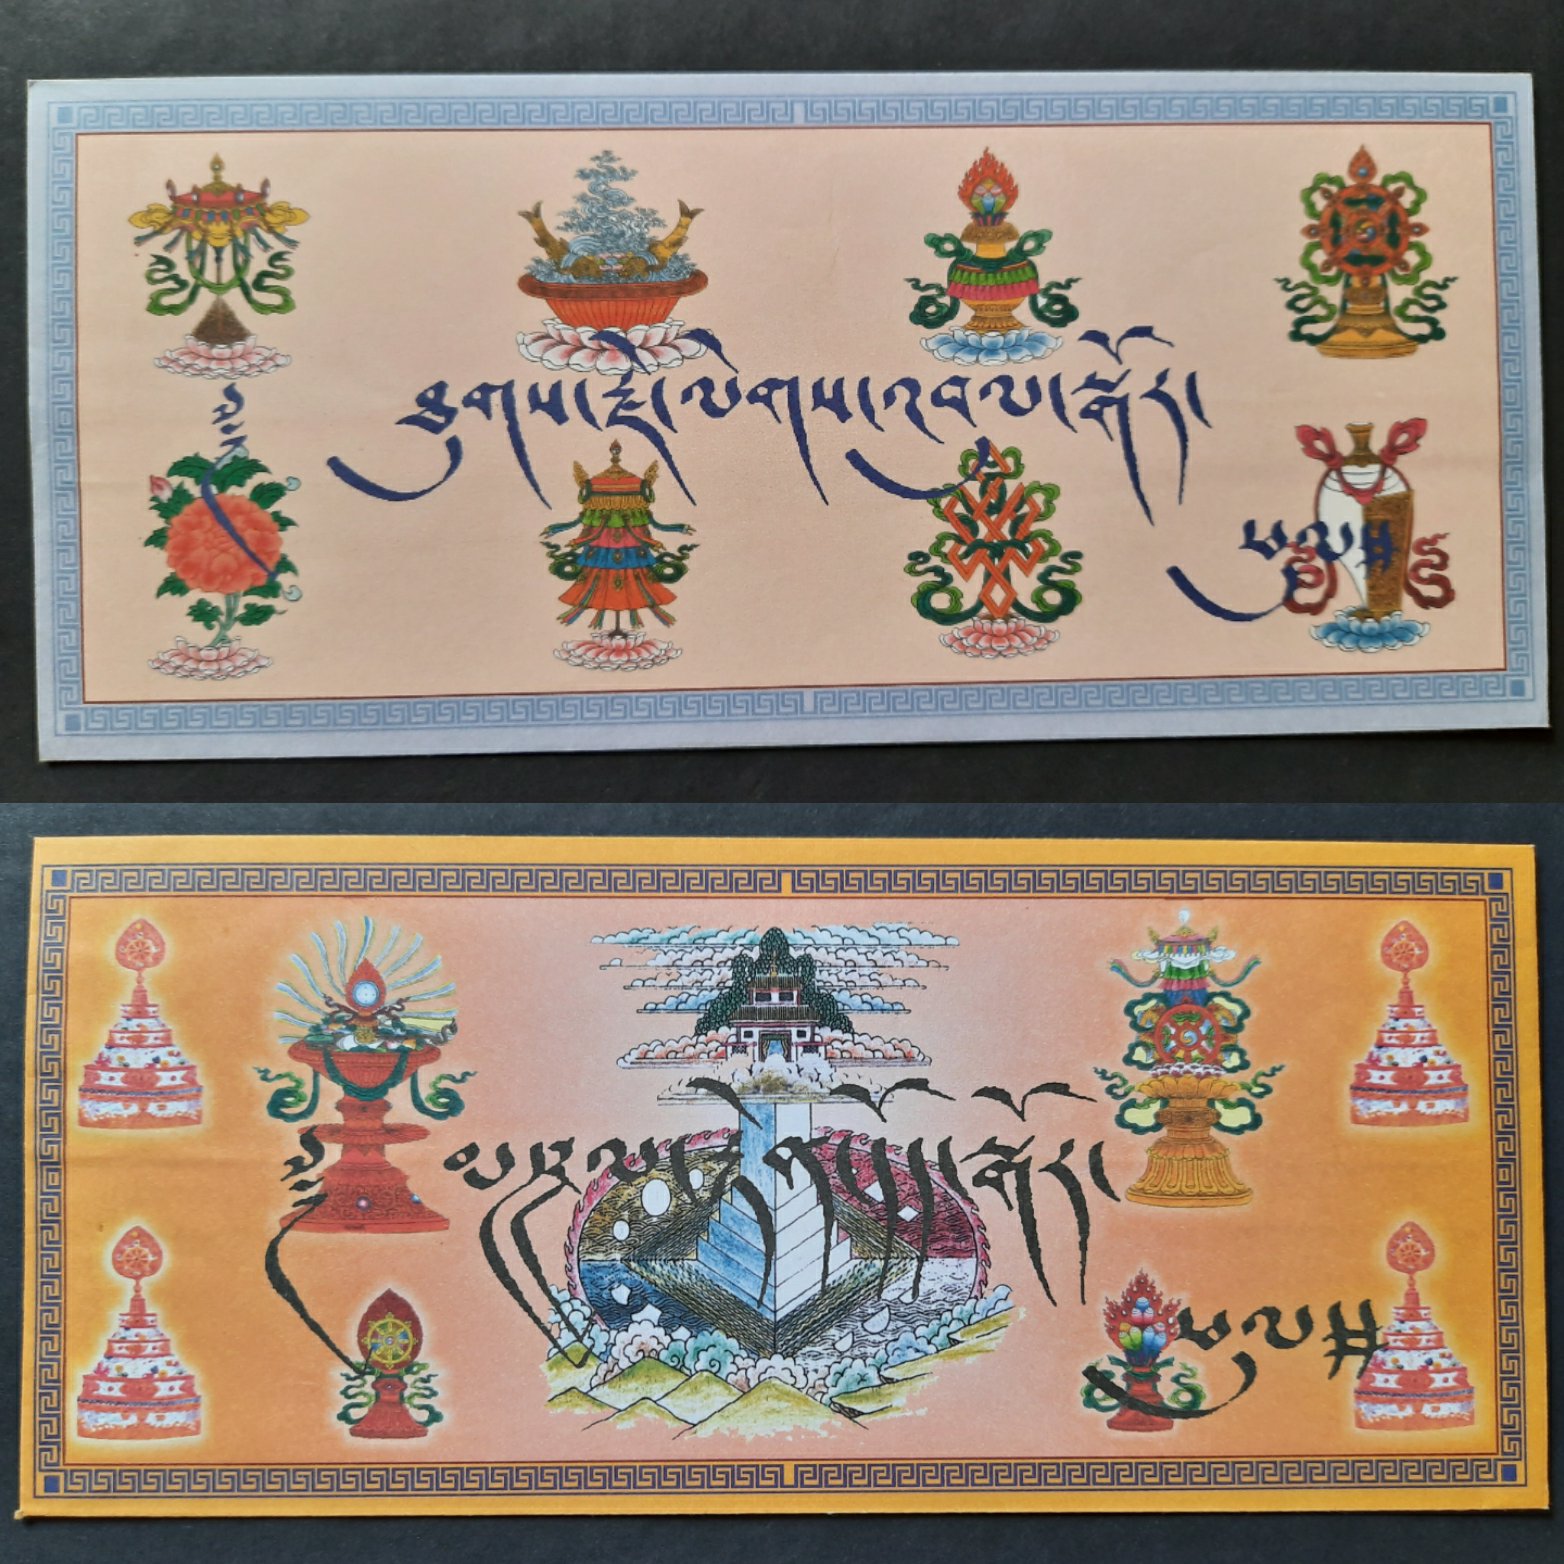 Tibetan art in modern gifts